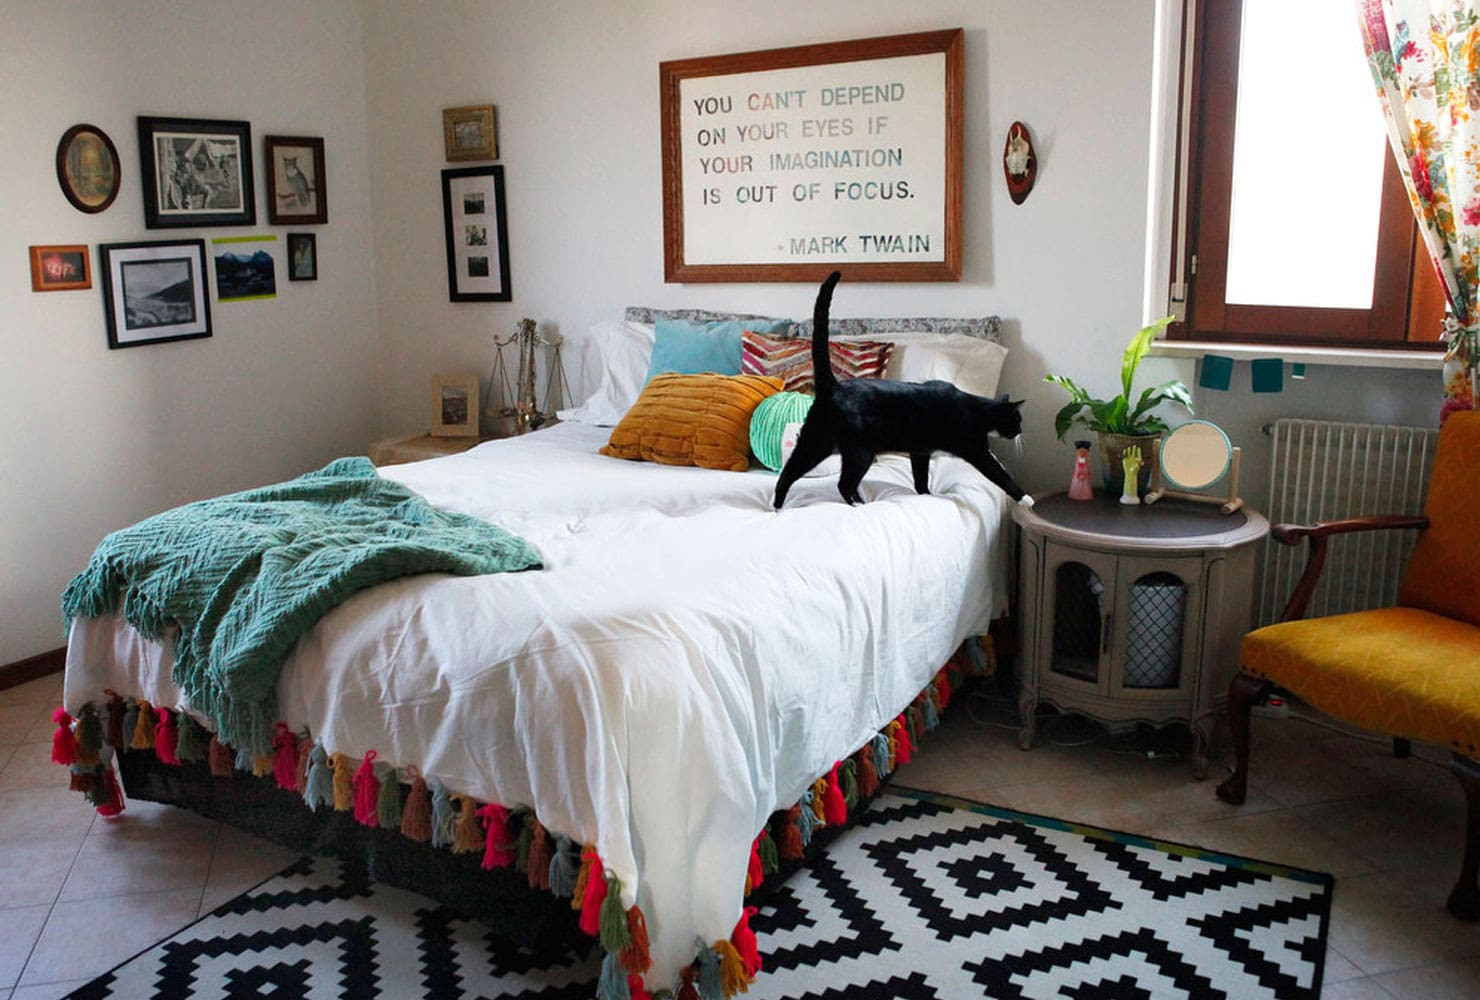 Bedroom DIY Decorating Ideas
 24 DIY Bedroom Decor Ideas To Inspire You With Printables